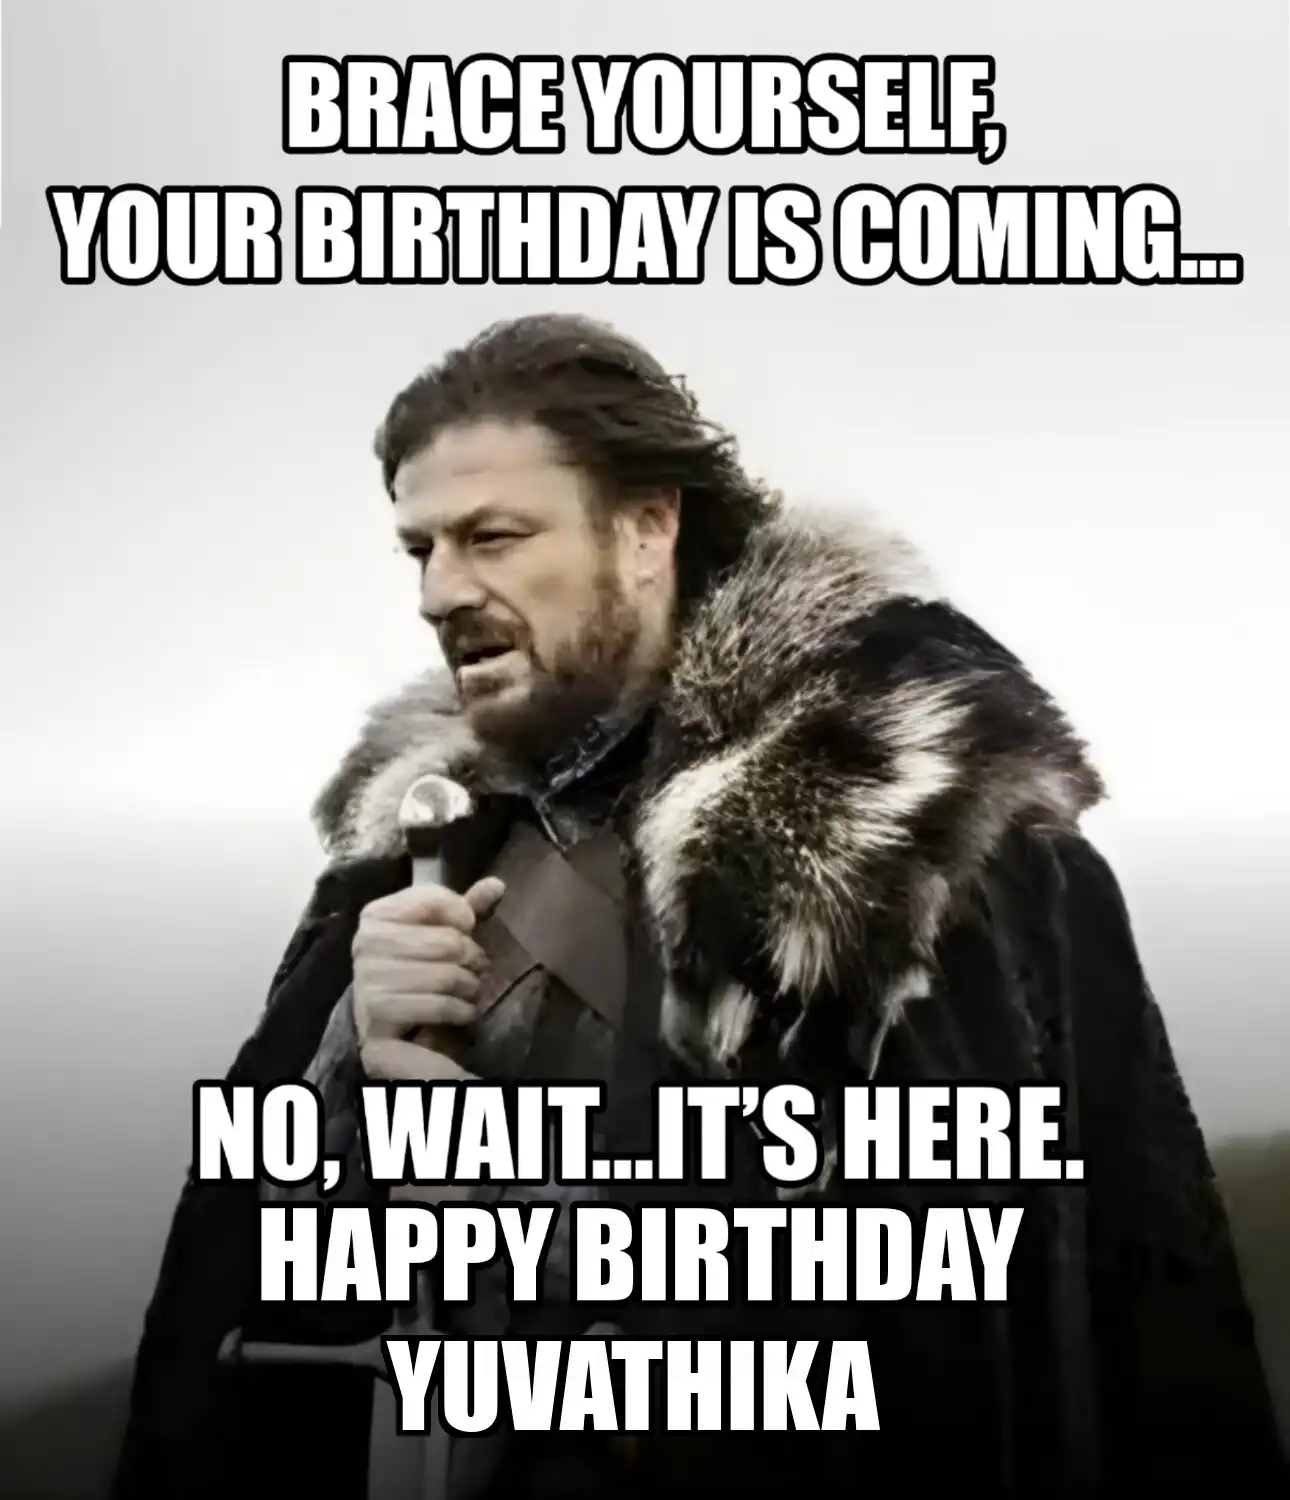 Happy Birthday Yuvathika Brace Yourself Your Birthday Is Coming Meme